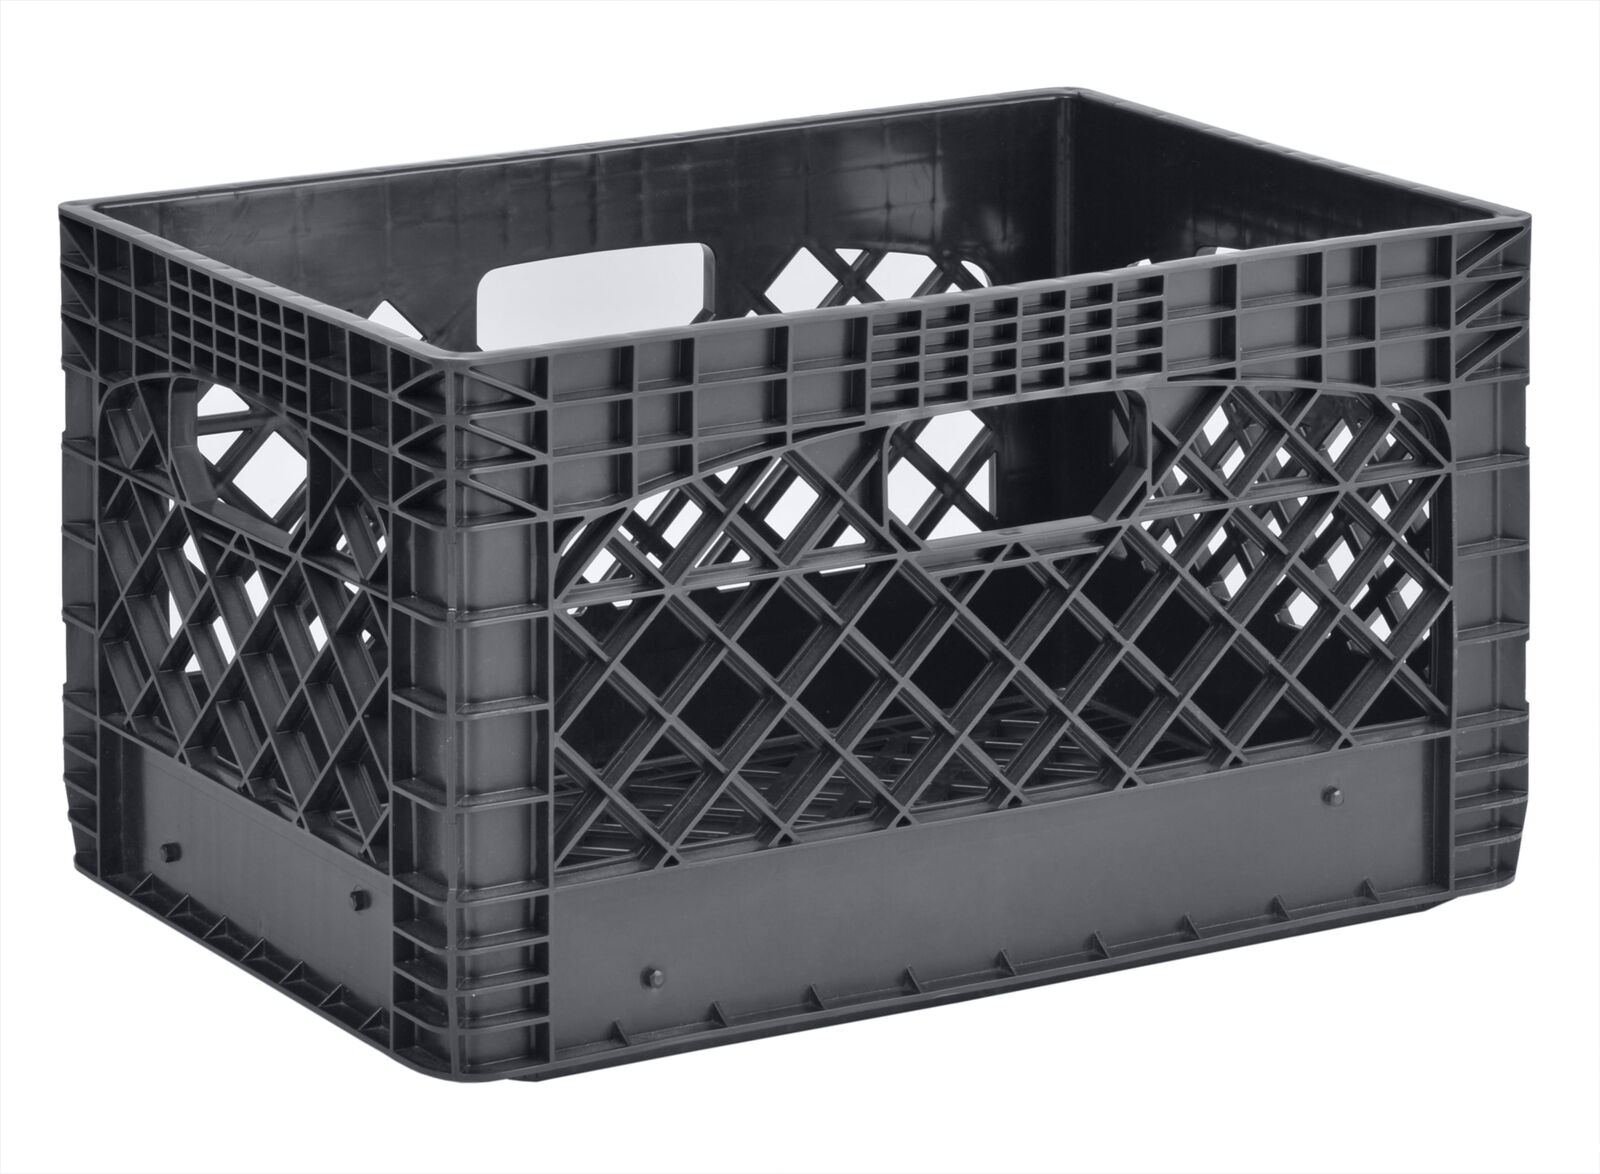 Juggernaut Storage 24QT Plastic Heavy-Duty Milk Crate